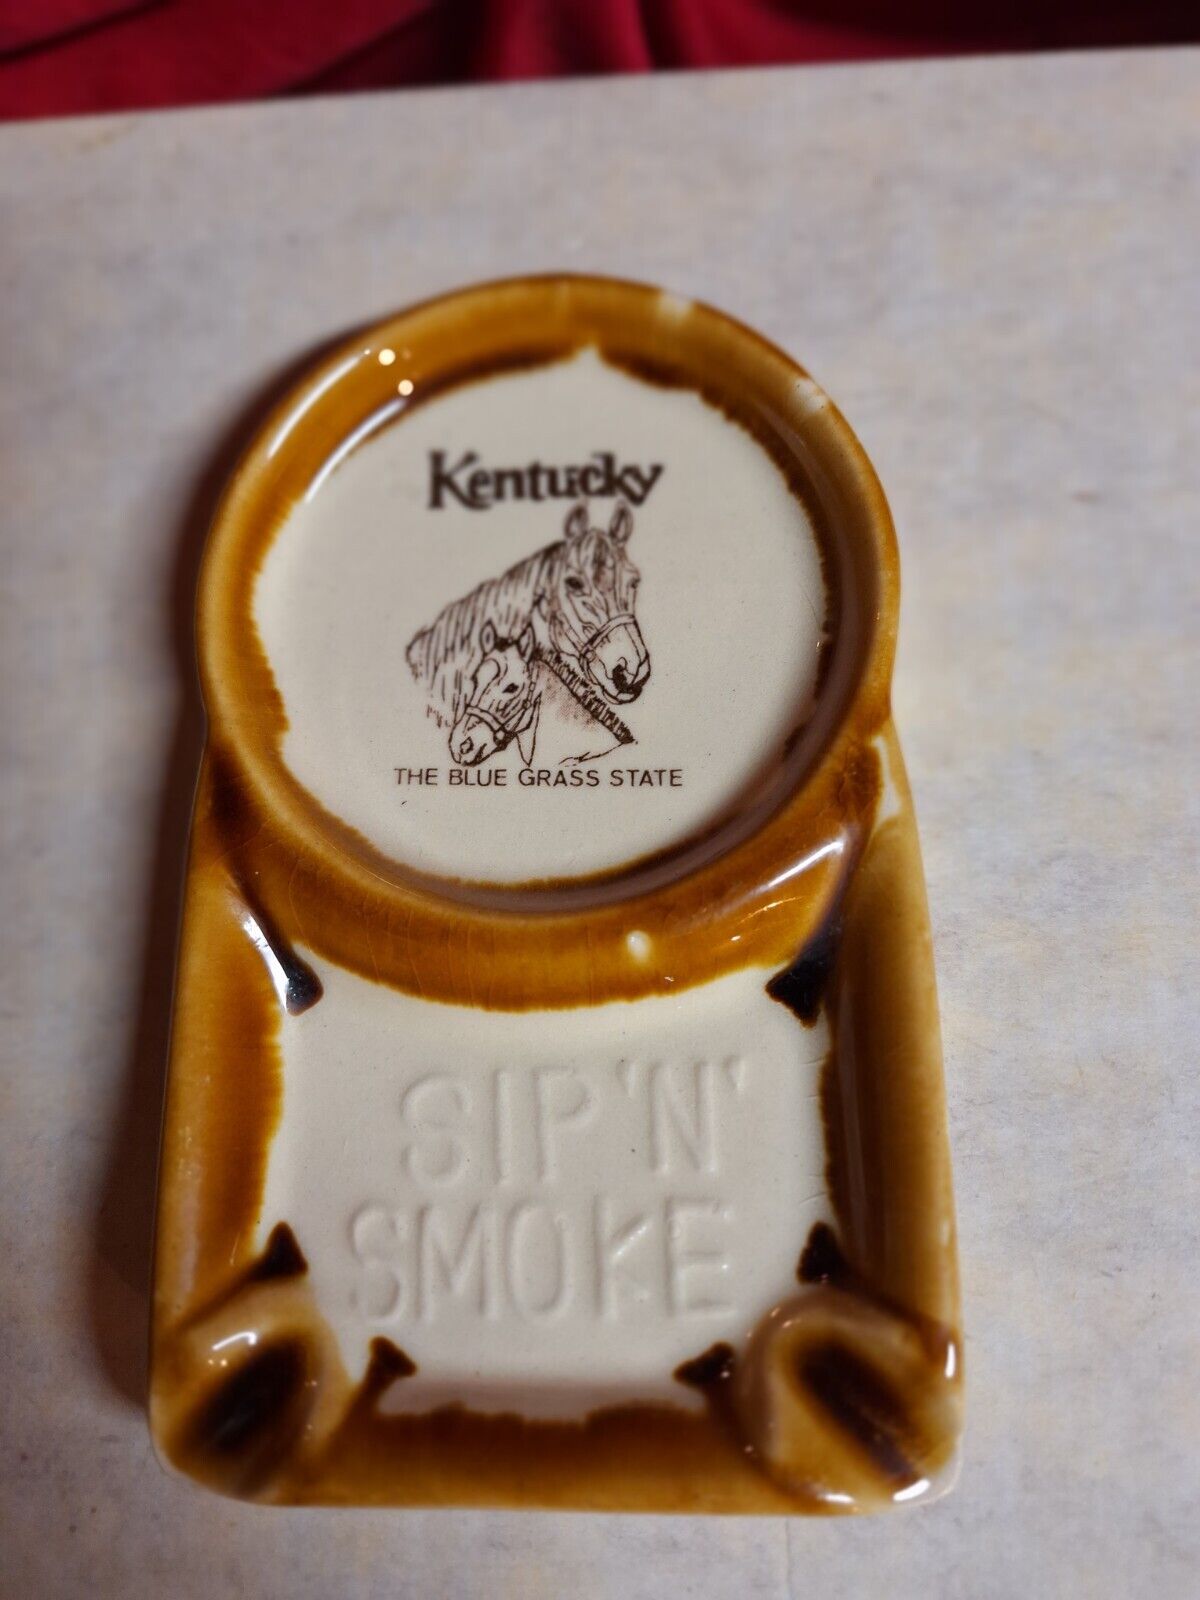 Vintage Kentucky souvenir ashtray Sip 'N' Smoke ceramic cream color with light